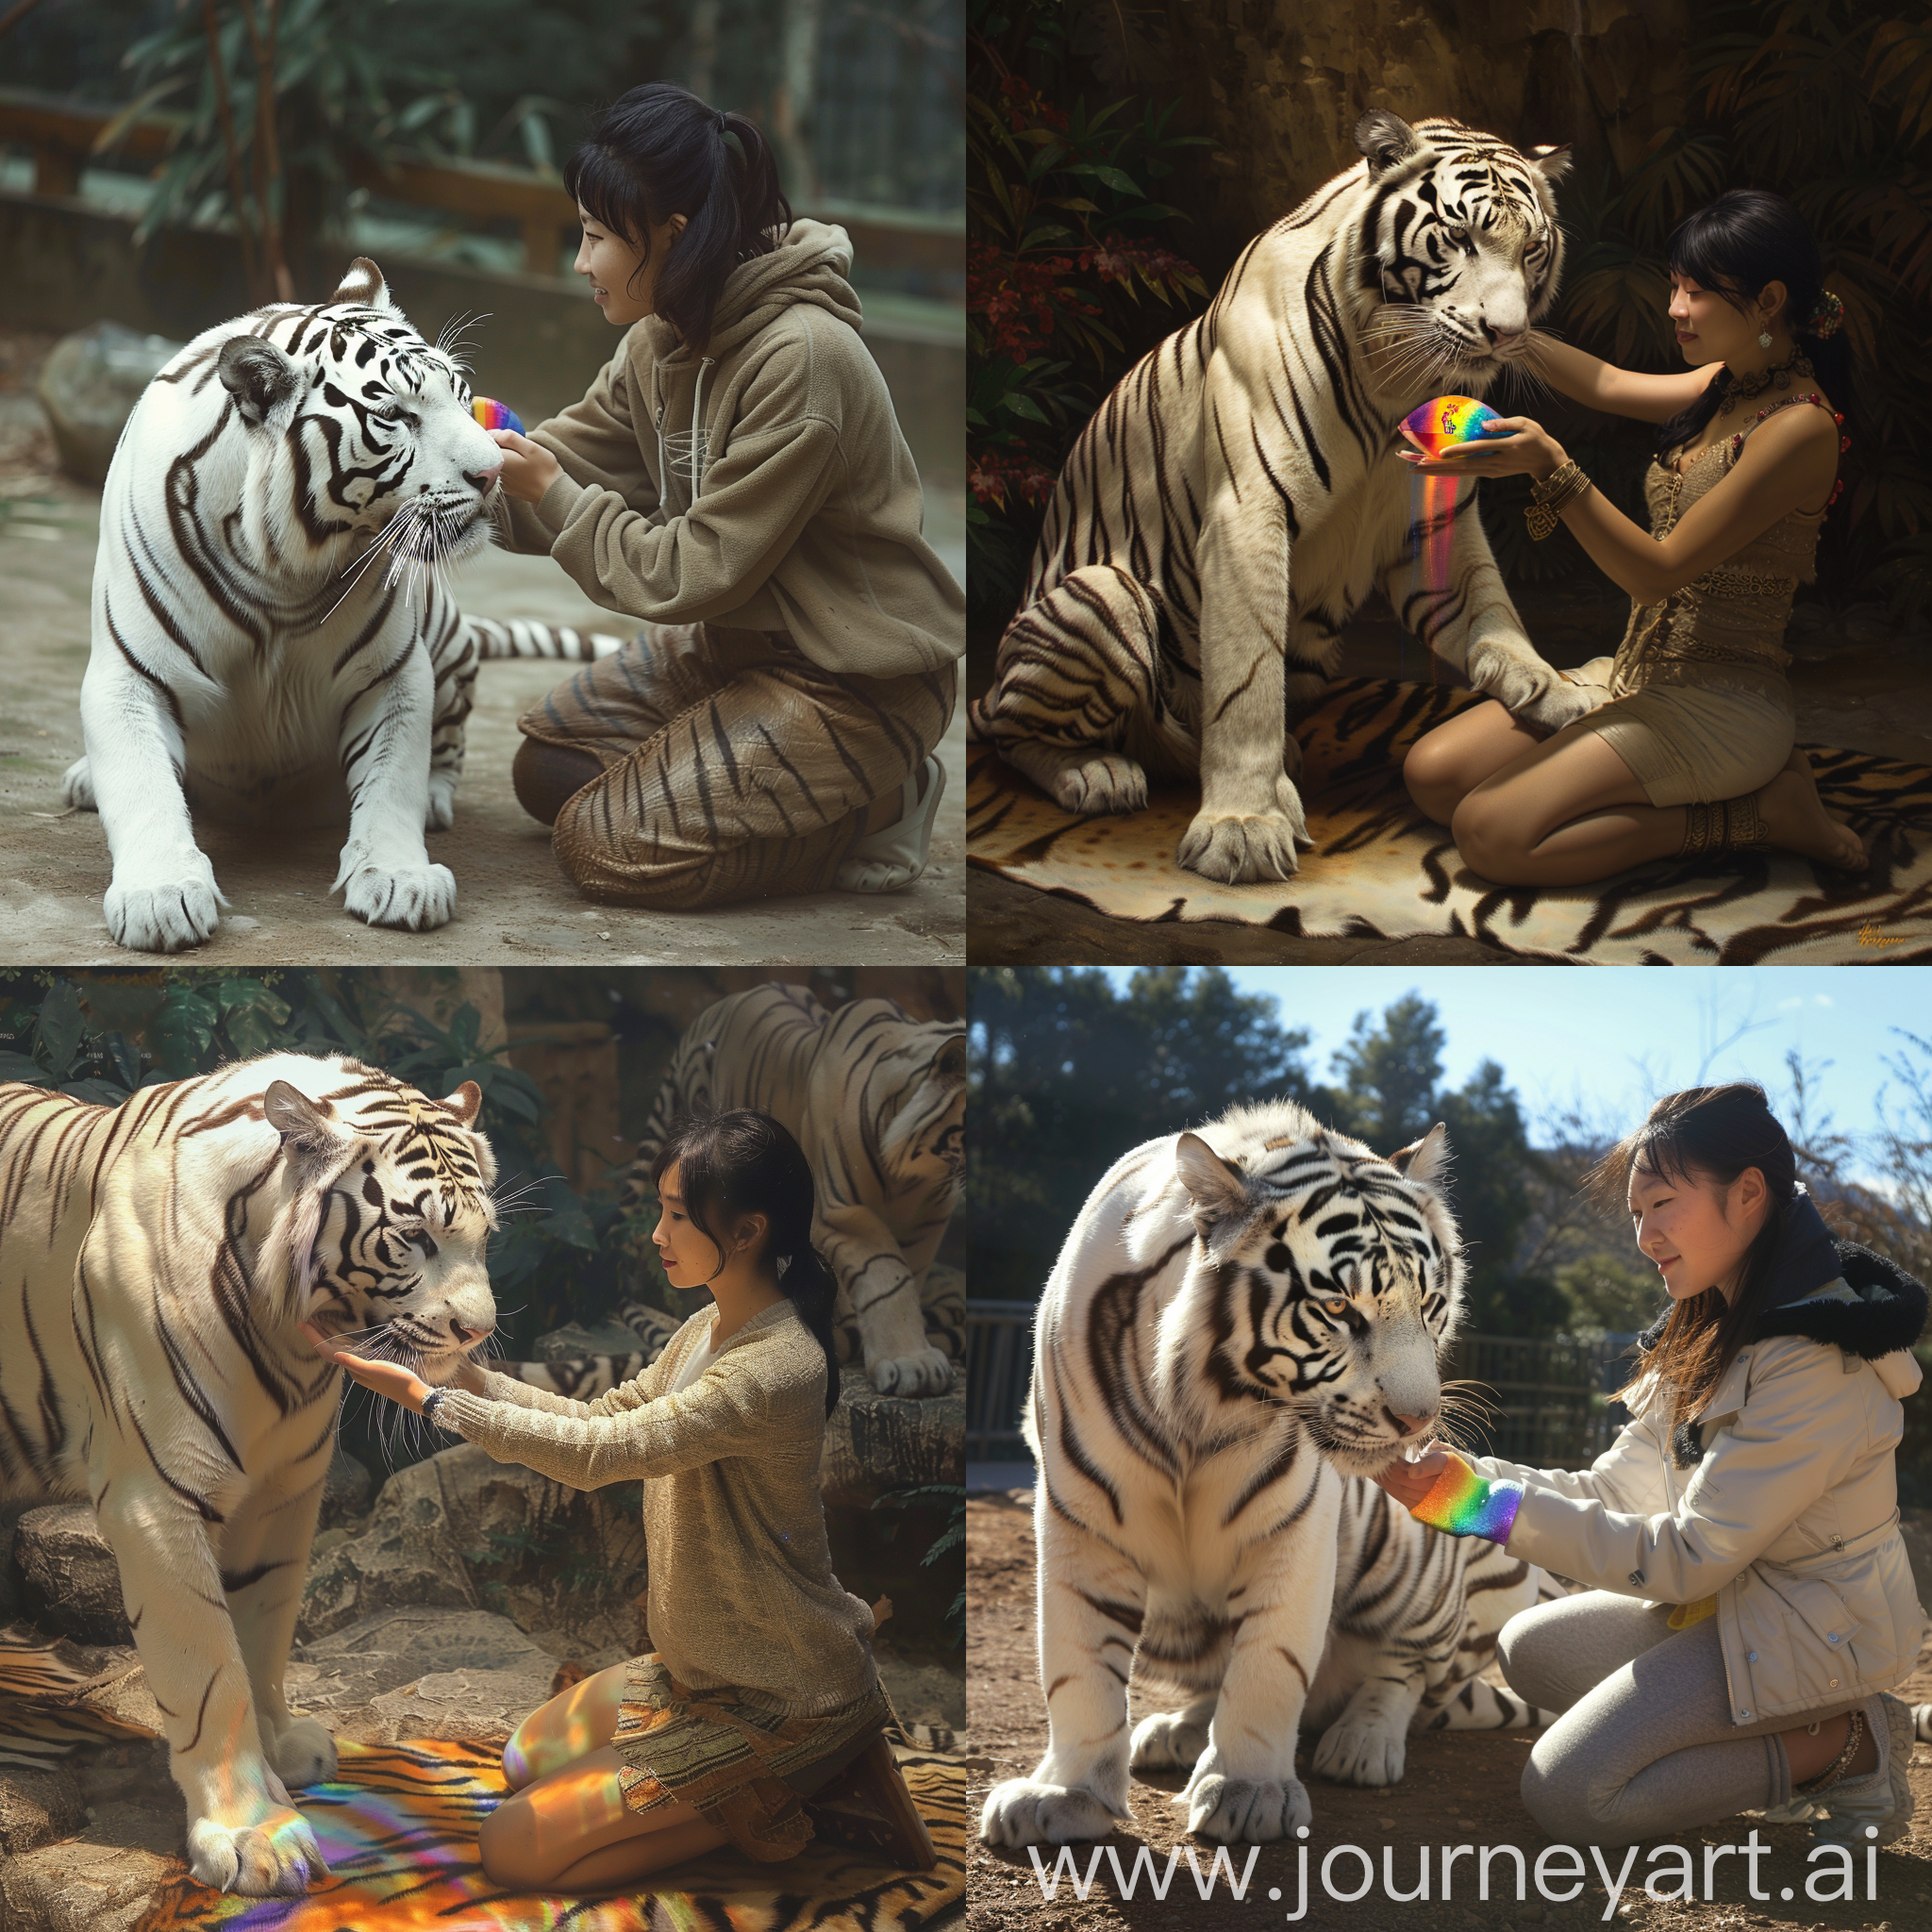 a woman kneeling down petting a white tiger, tigers, kda and sam yang, tiger skin, a tiger, tiger_beast, tiger, asian female, ((tiger)), holding a rainbow tiger gem, asian women, young asian woman, white tiger, tiger stripes, sacred tiger, asian girl, lariennechan, pet animal, xiaofan zhang